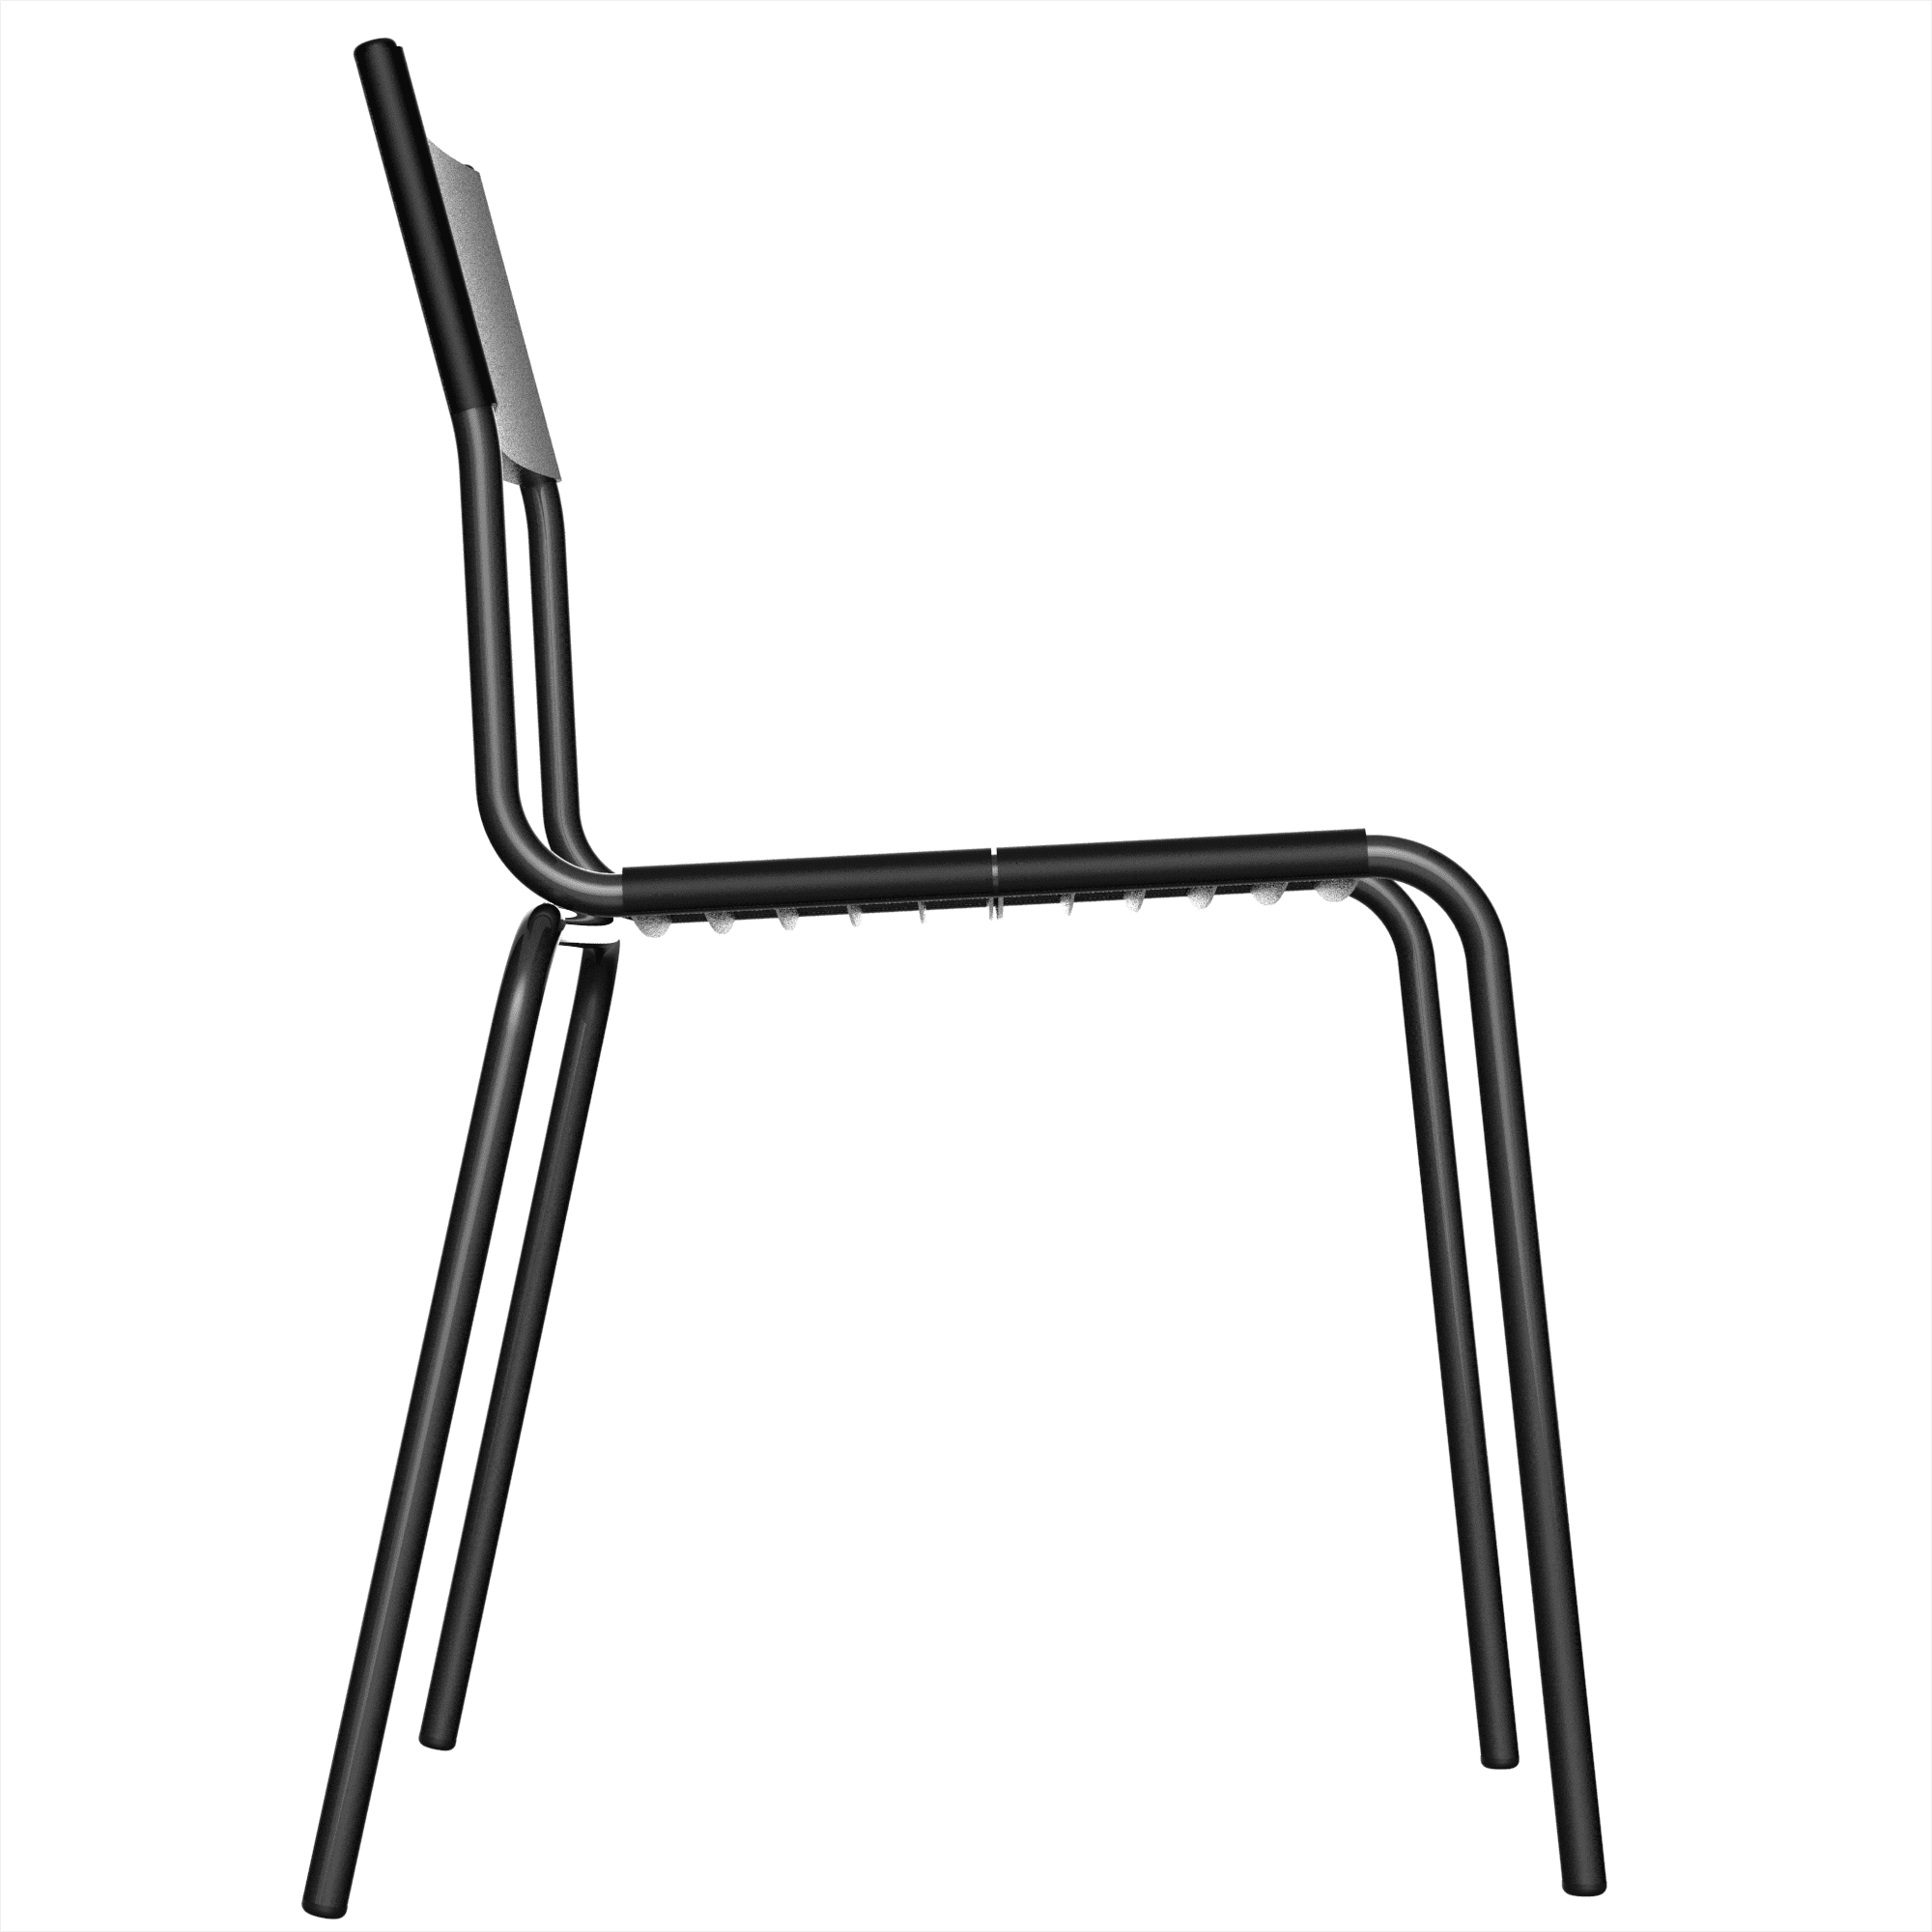 Cadeira Tutti